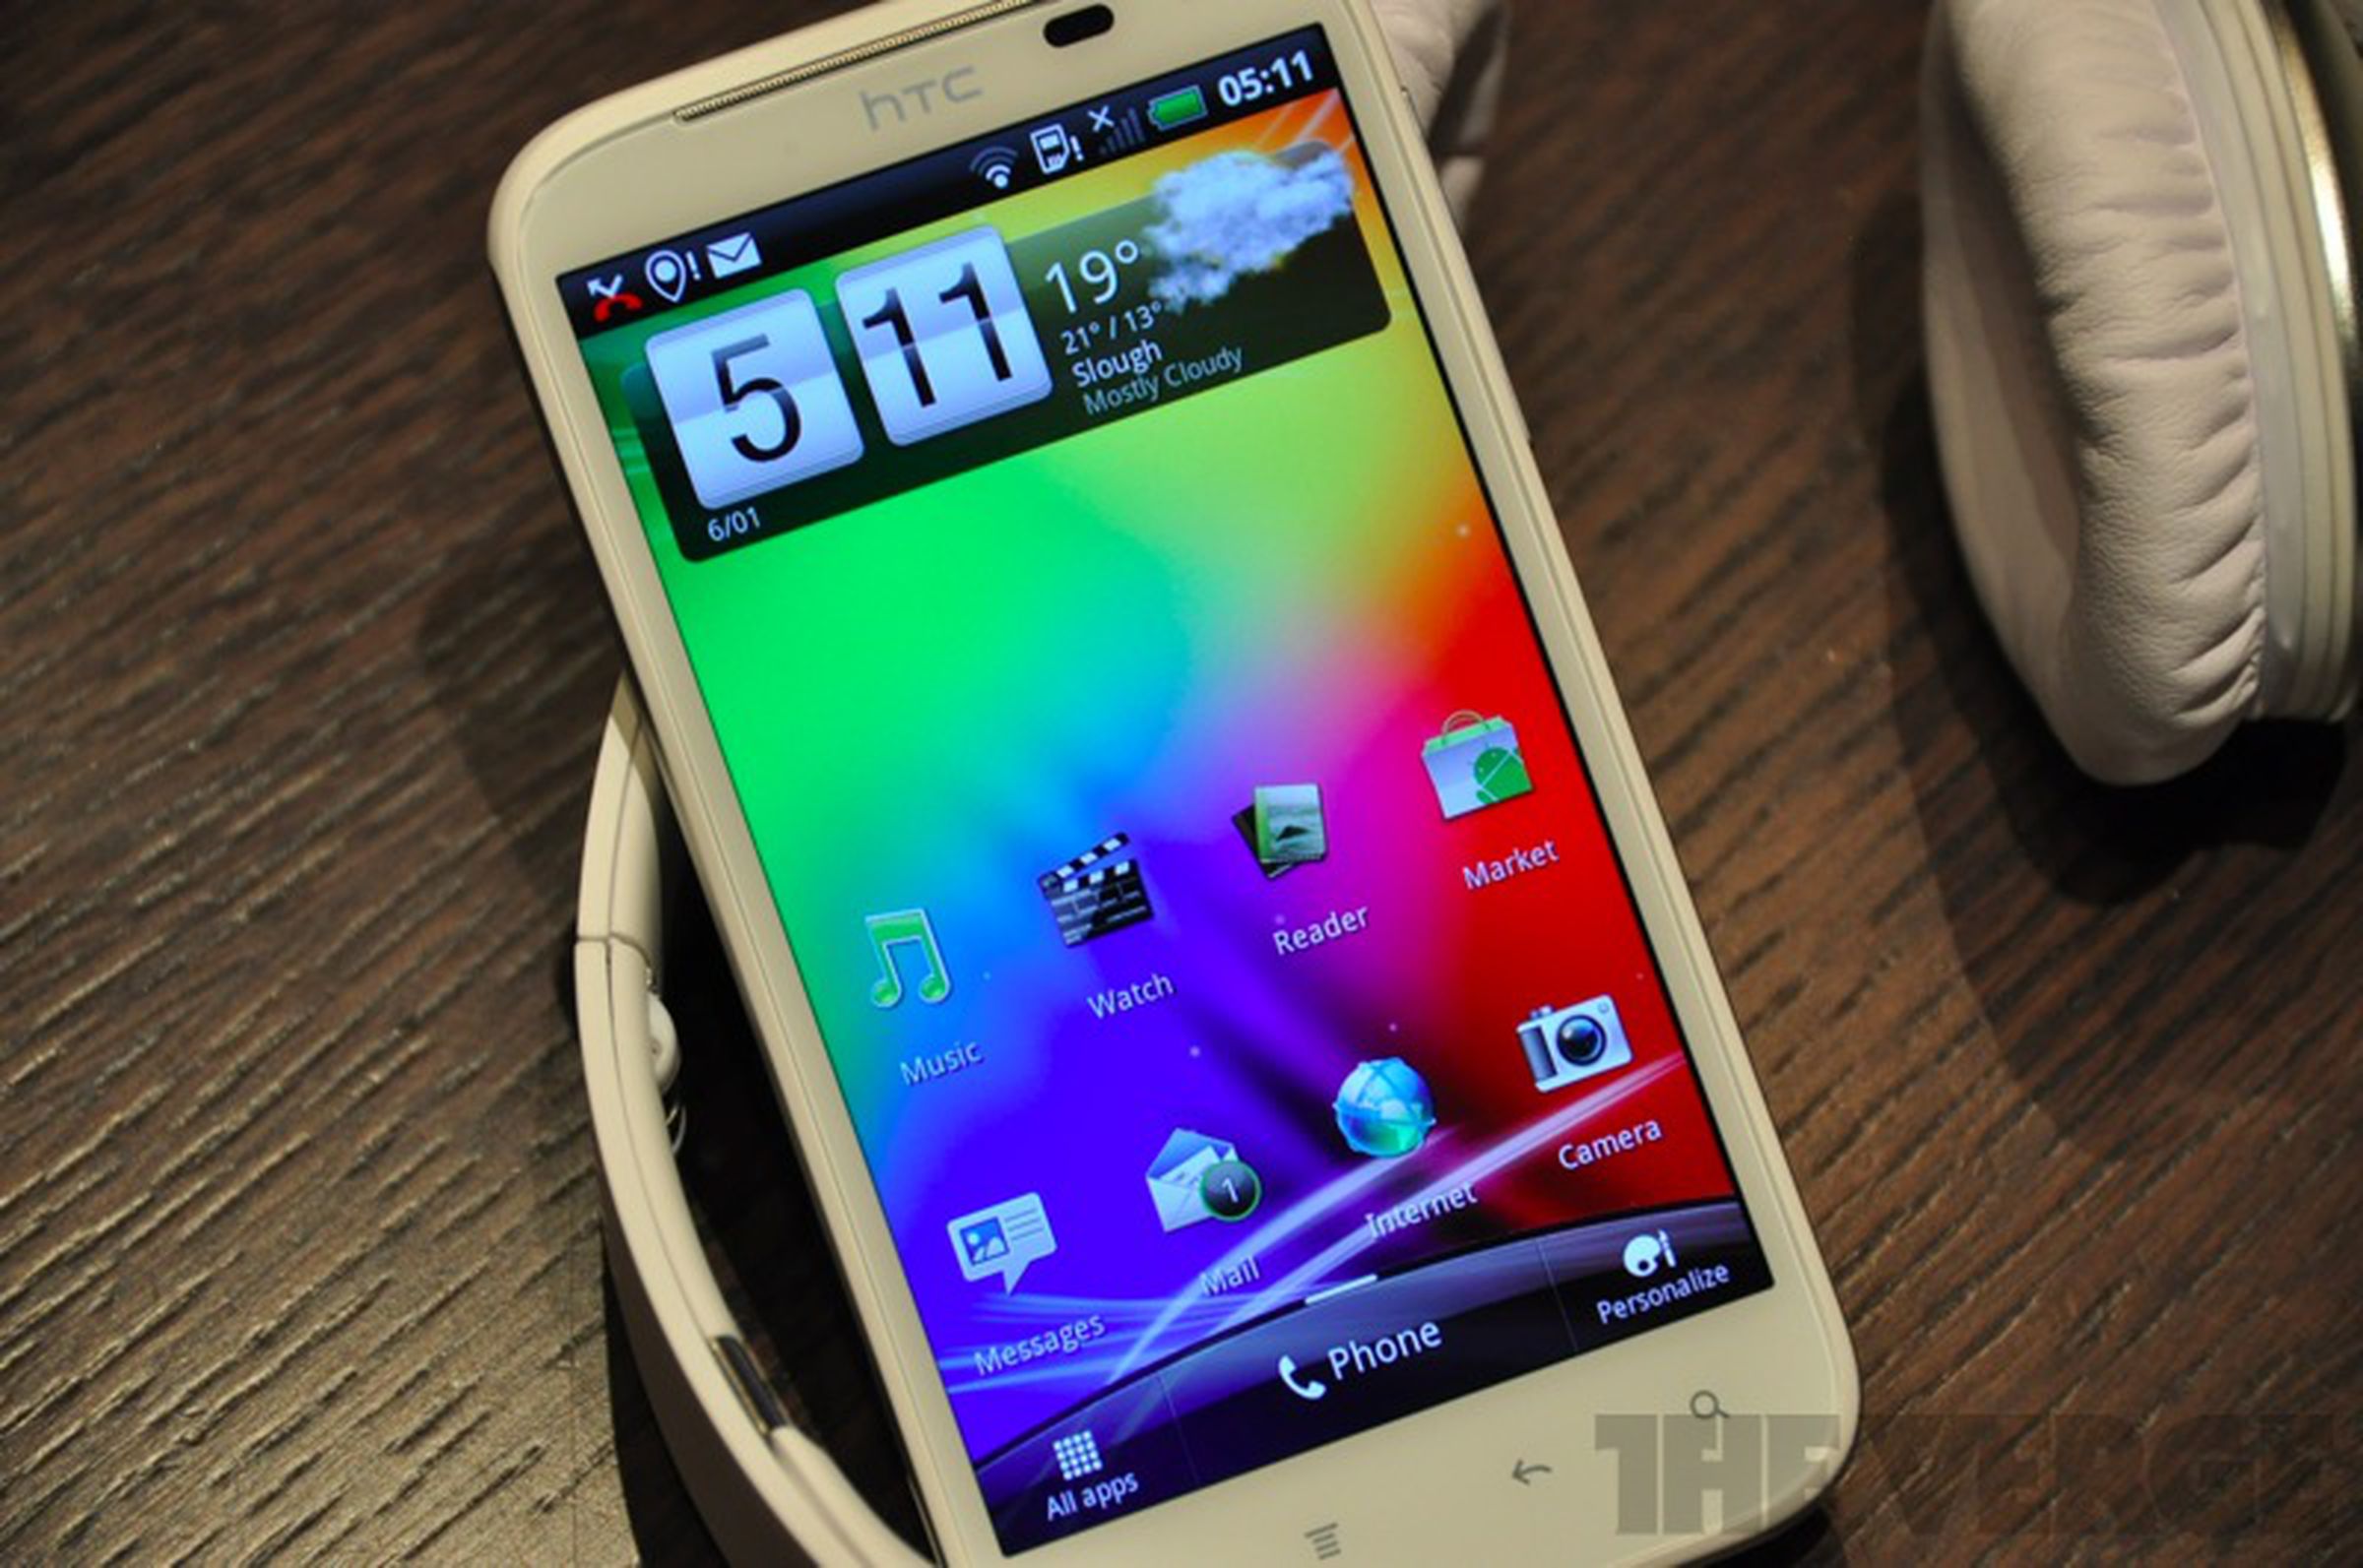 HTC Sensation XL hands-on pictures